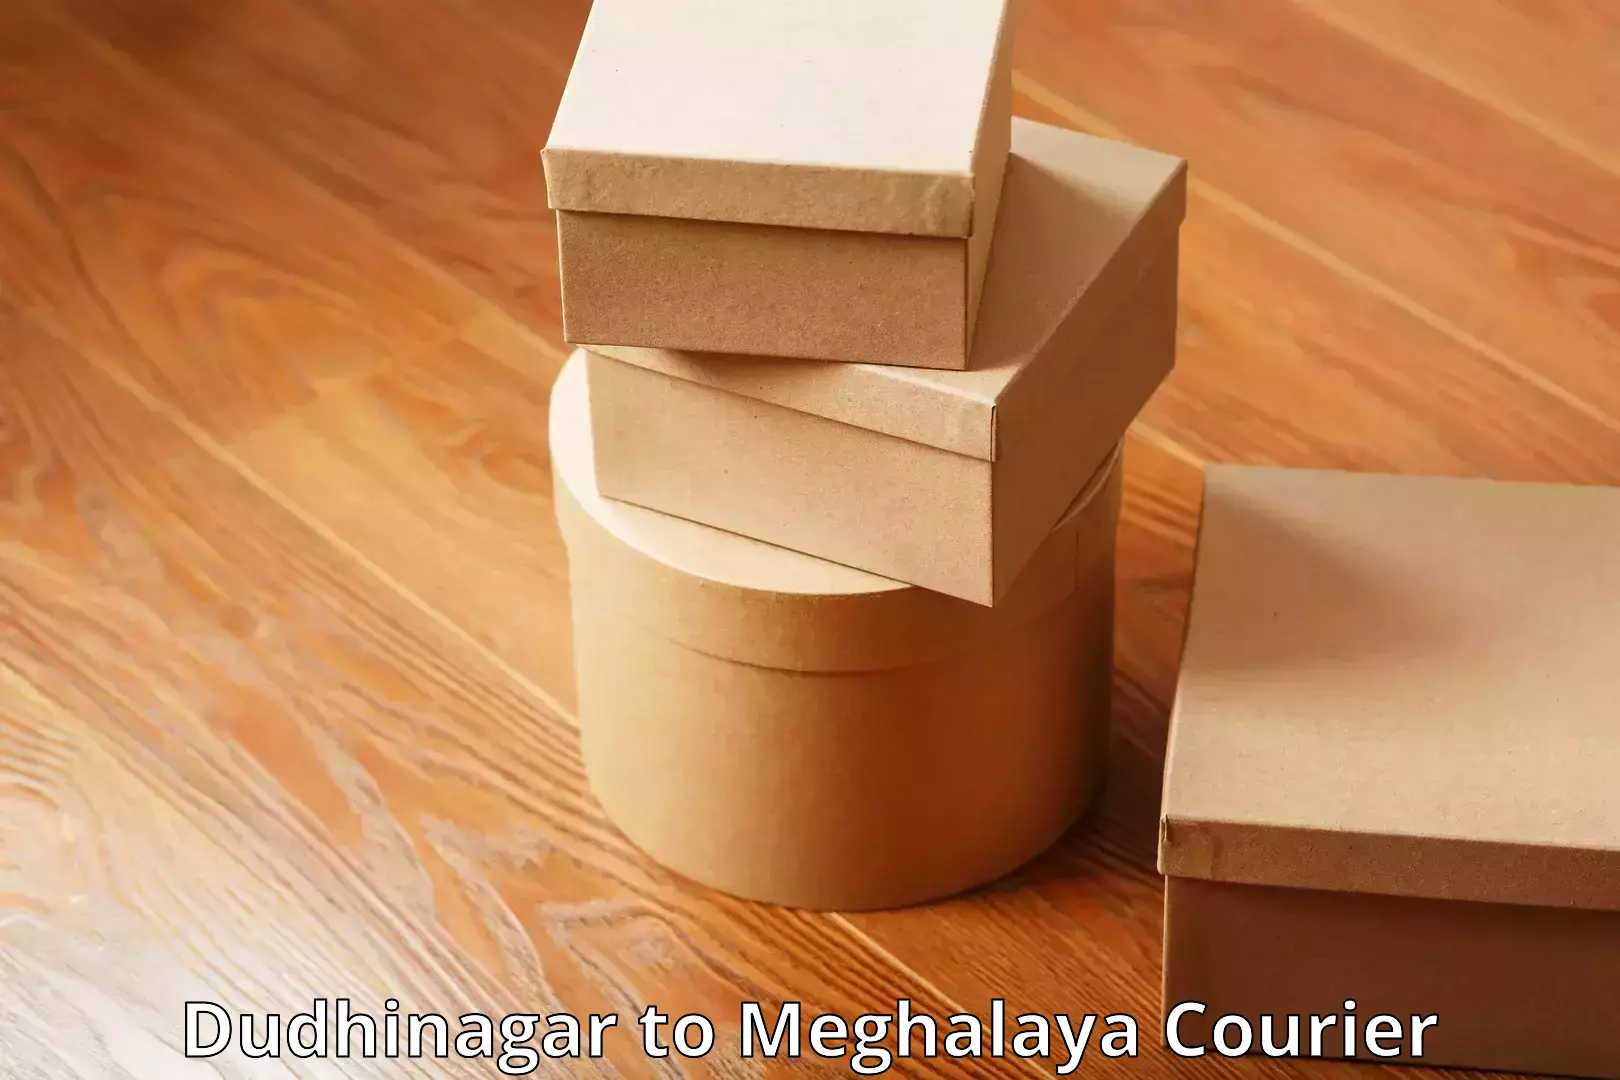 Luggage shipment specialists Dudhinagar to Meghalaya